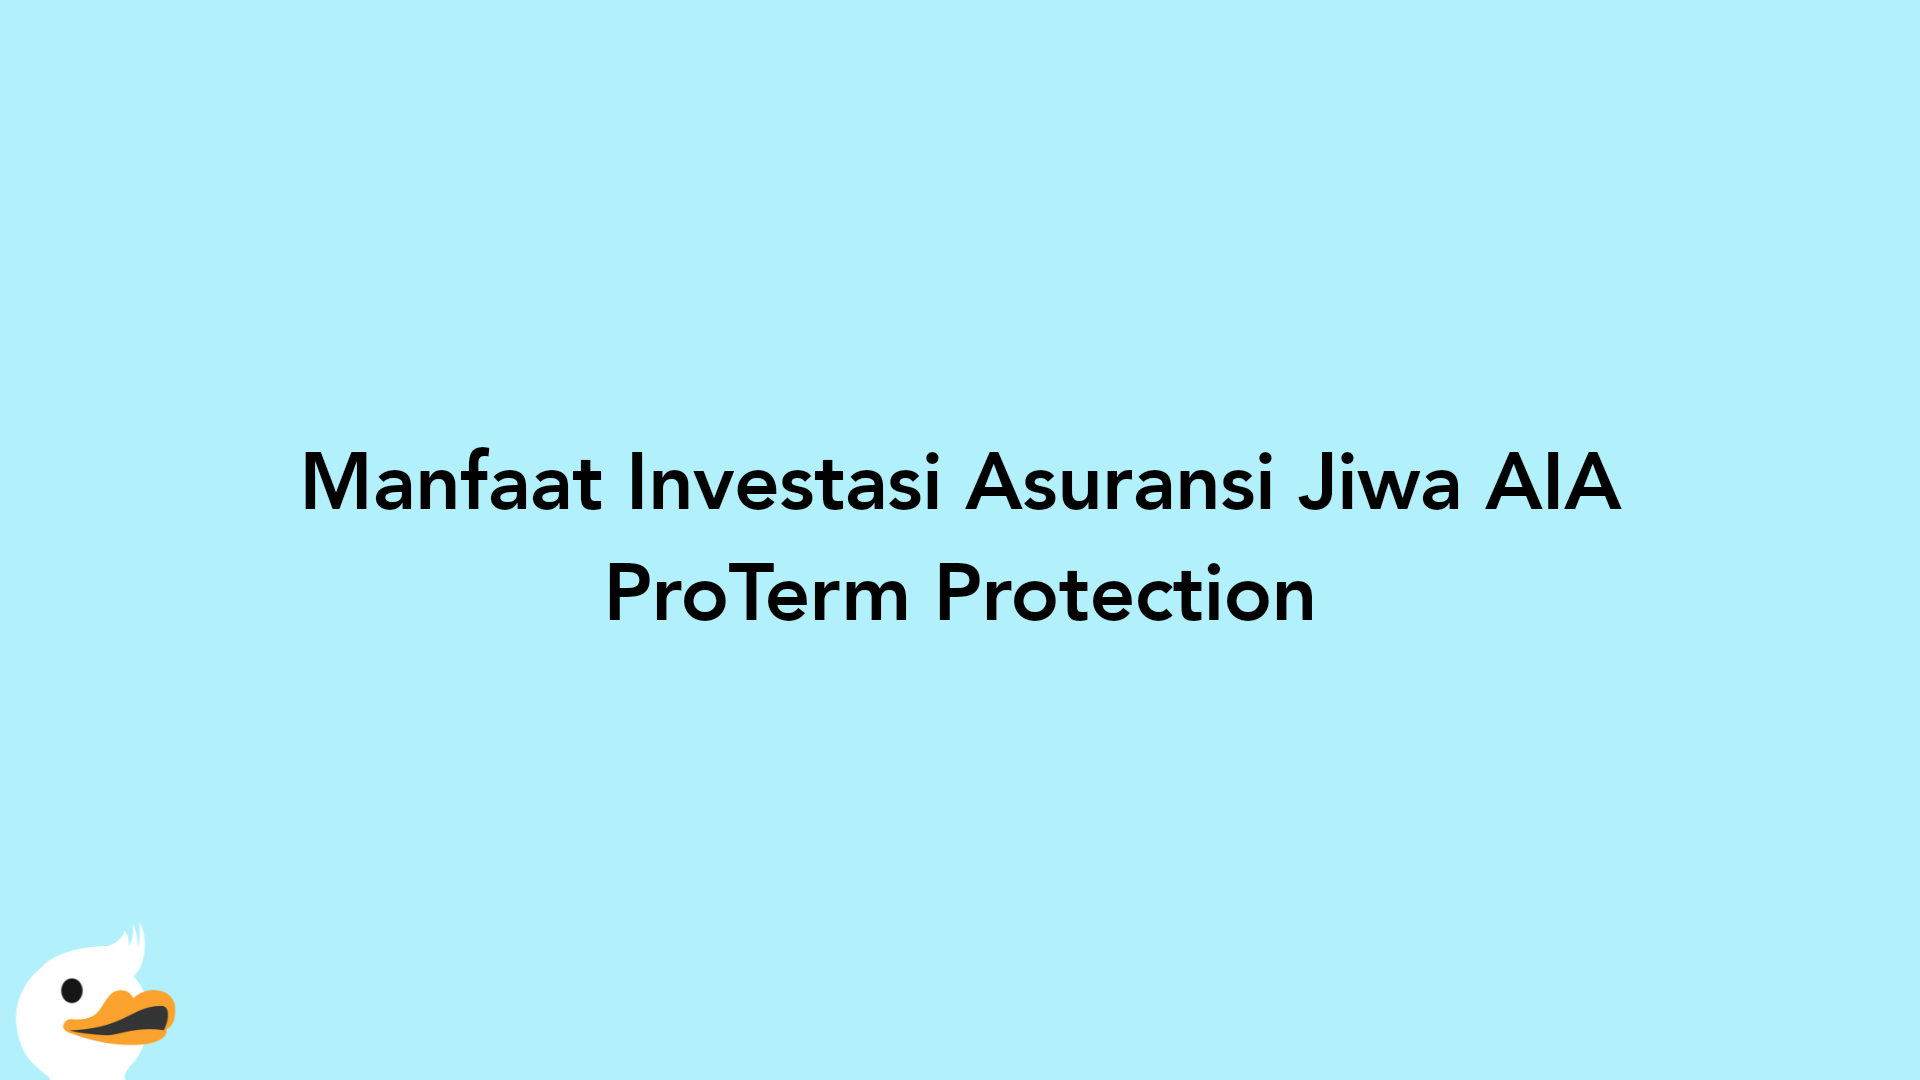 Manfaat Investasi Asuransi Jiwa AIA ProTerm Protection